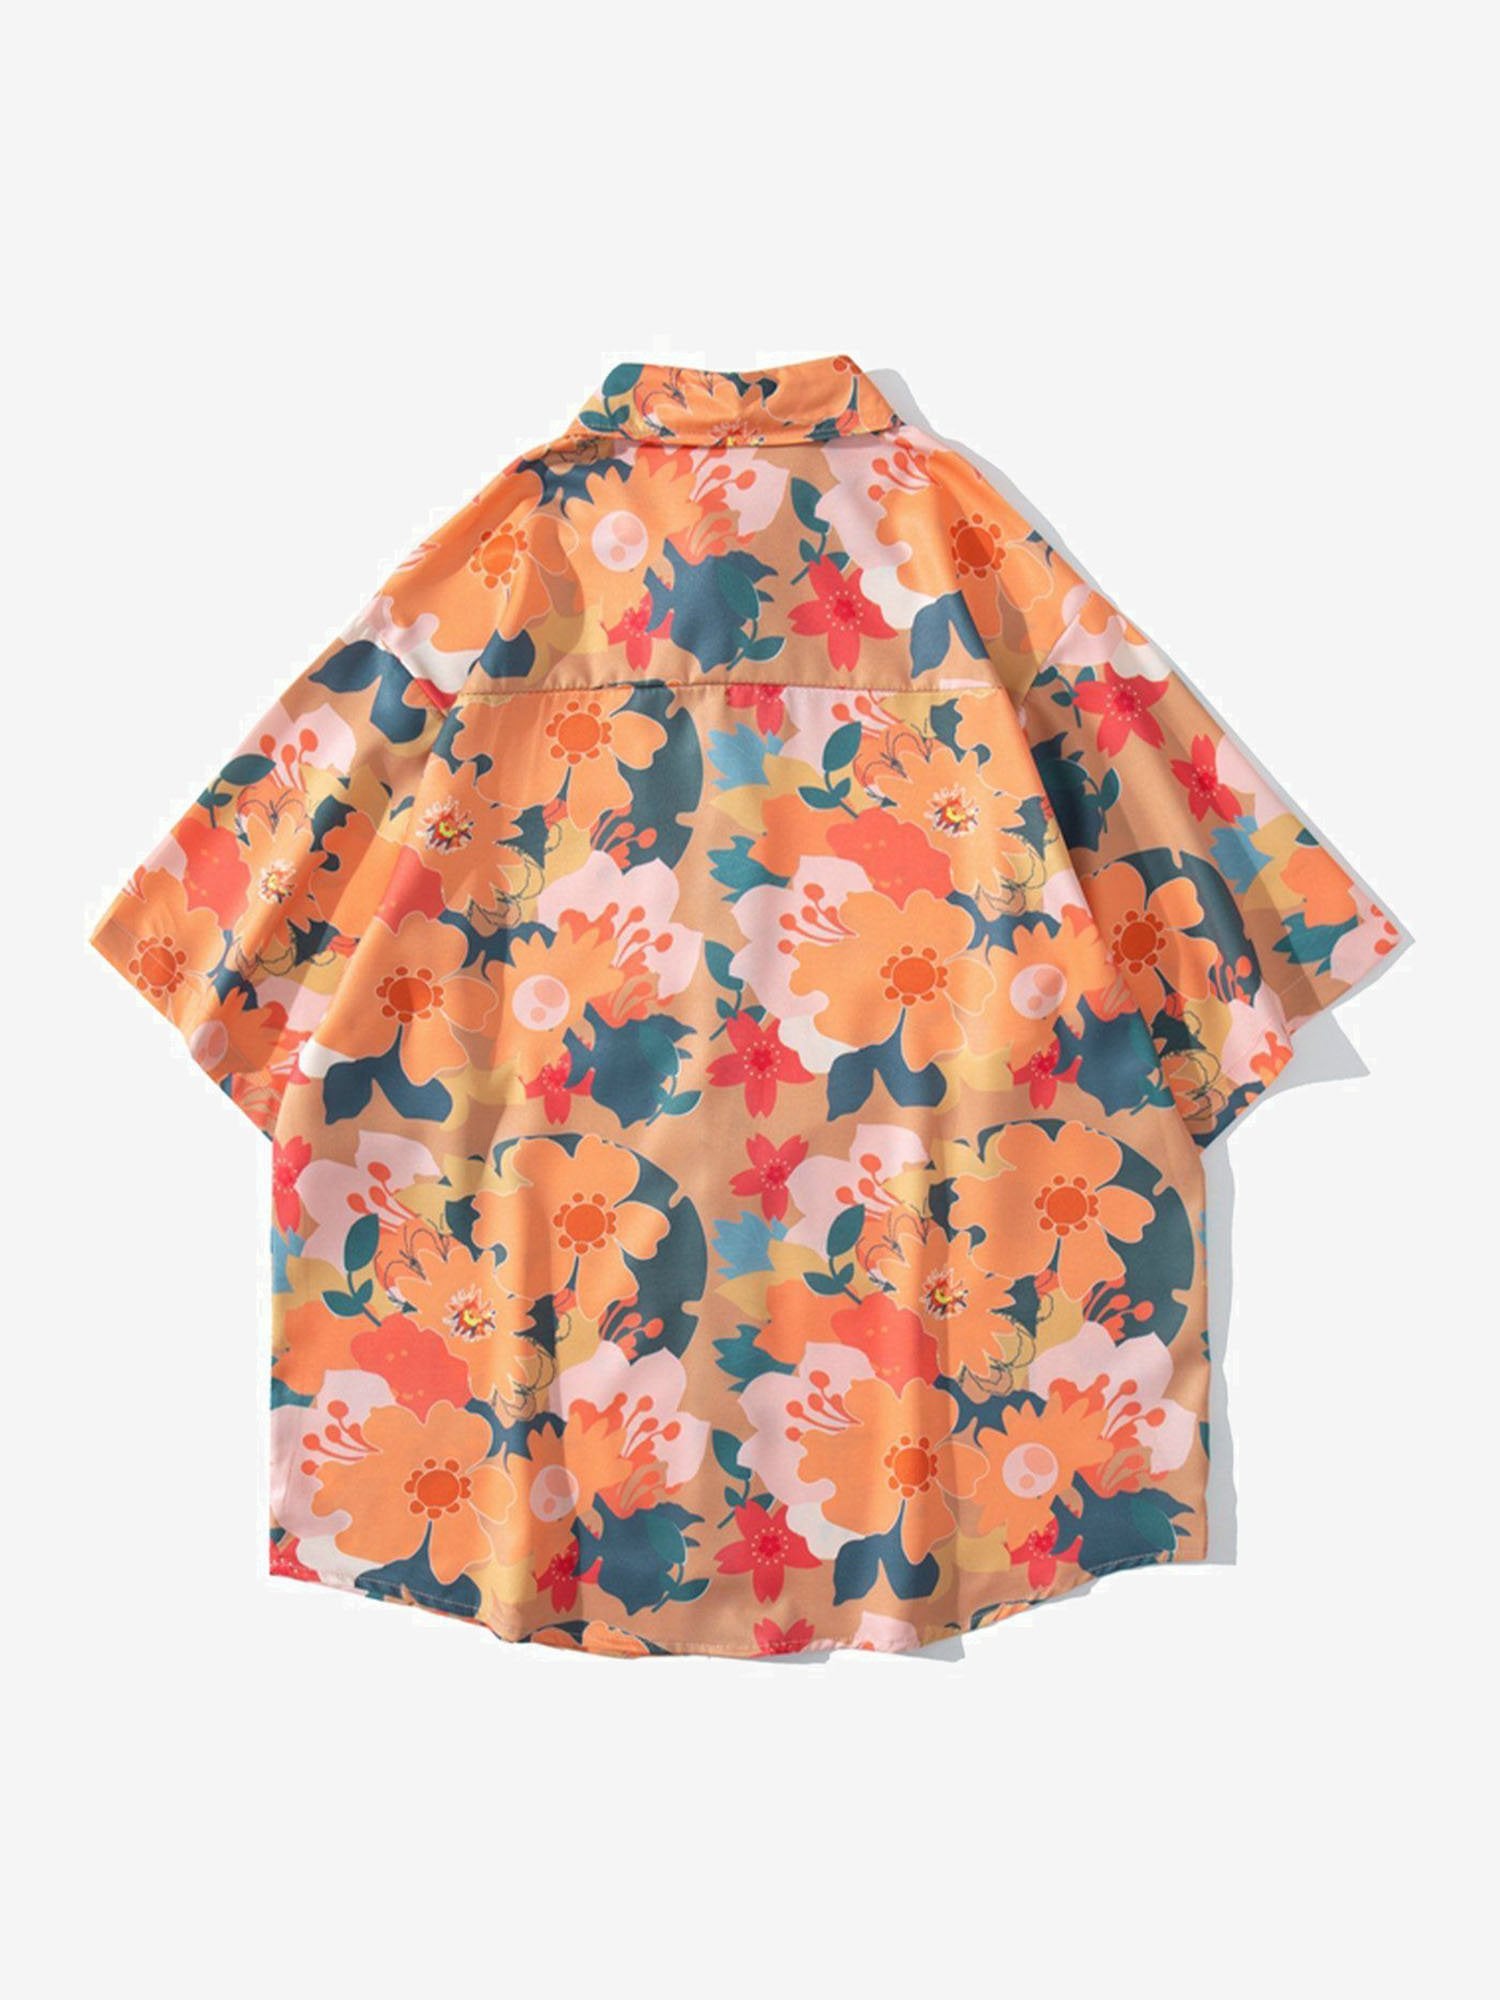 JUSTNOTAG Vintage Floral Holiday Style Short Sleeve Shirt